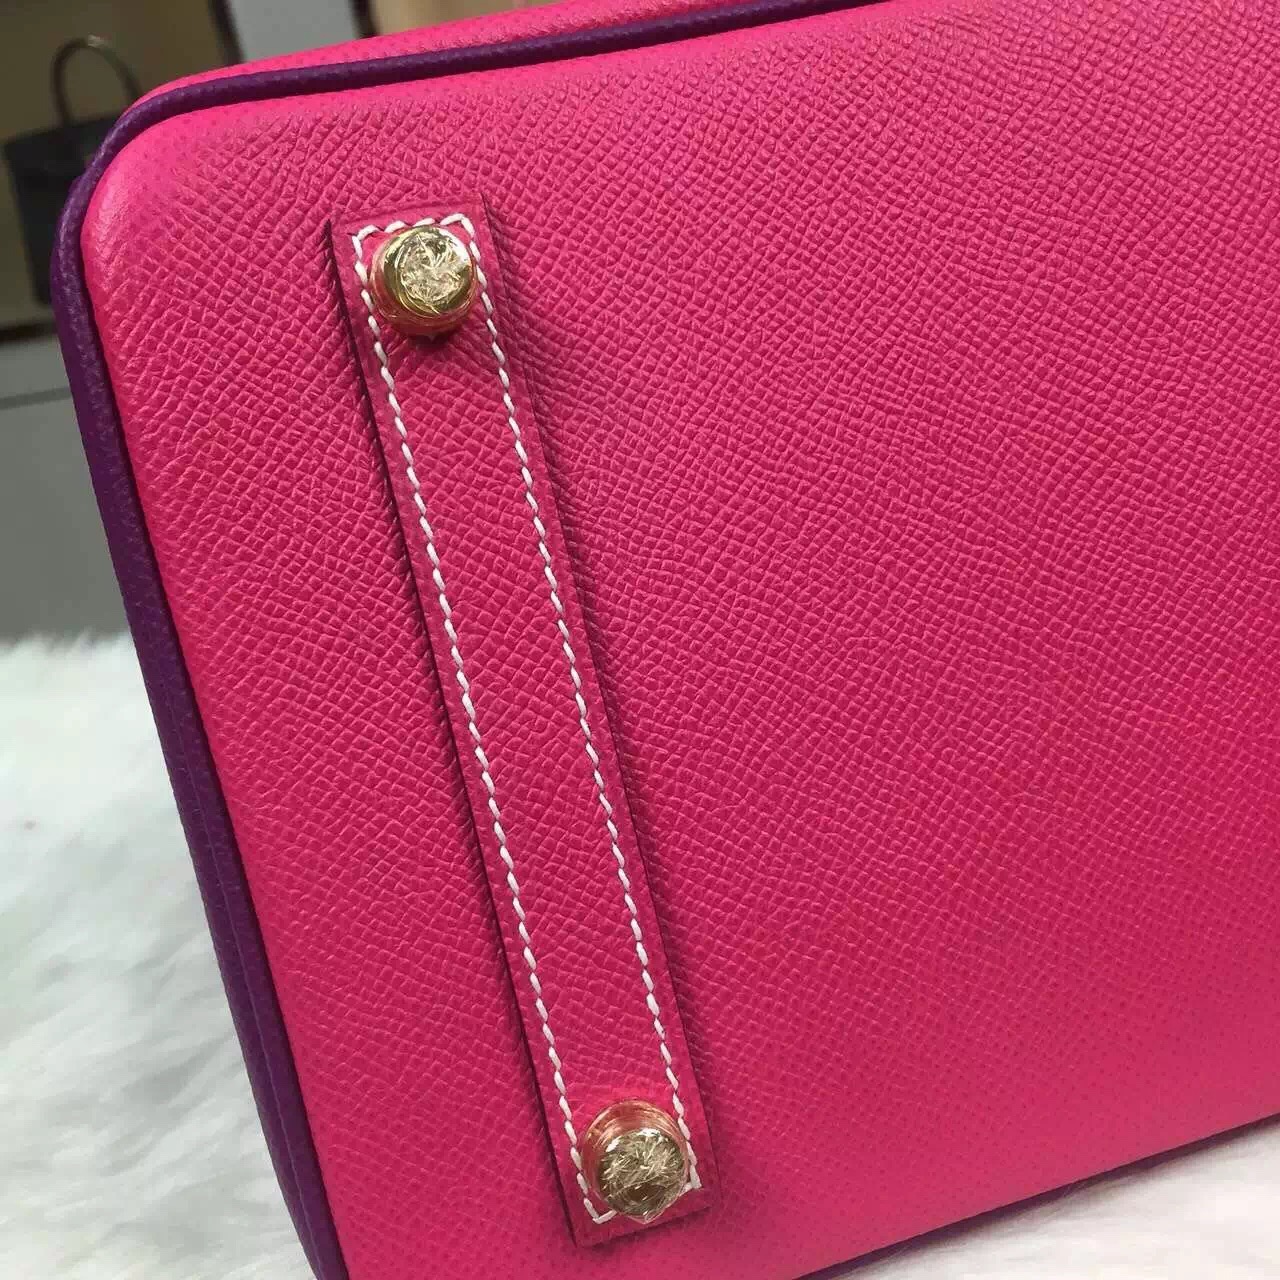 Luxury Hermes Birkin Bag 30CM E5 Candy Pink/P9 Anemone Purple Epsom Leather